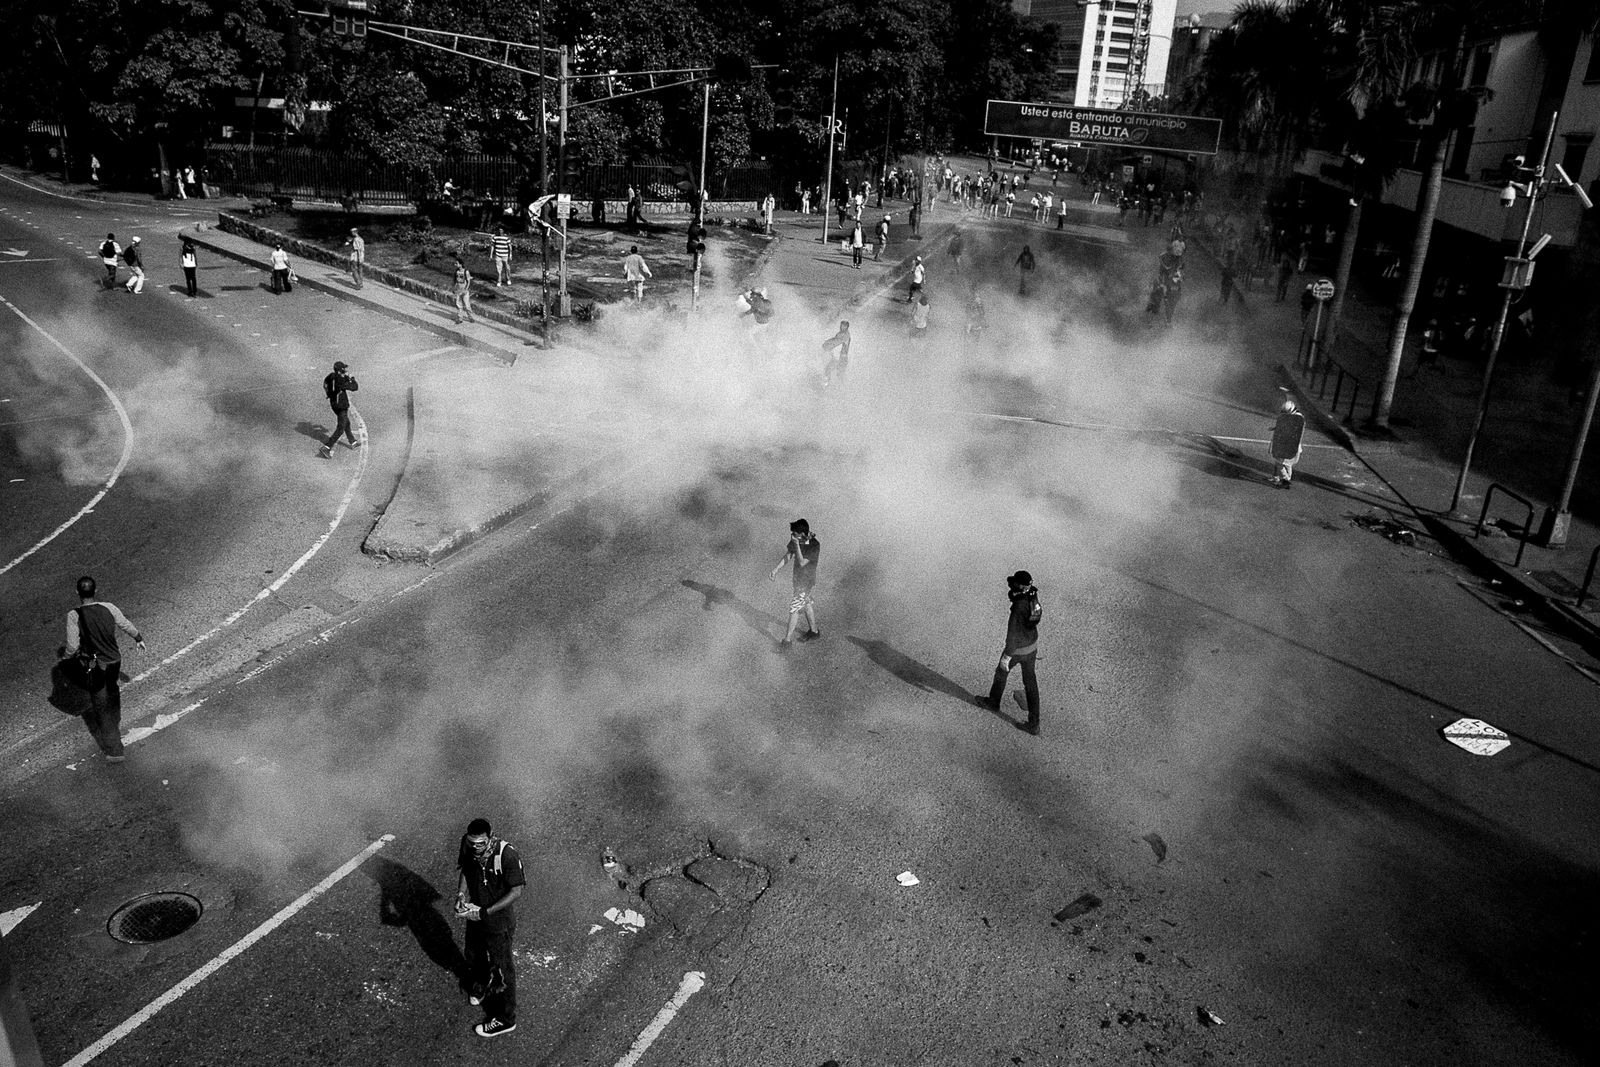 © Fabiola Ferrero - Image from the Venezuela: Blurred in despair photography project